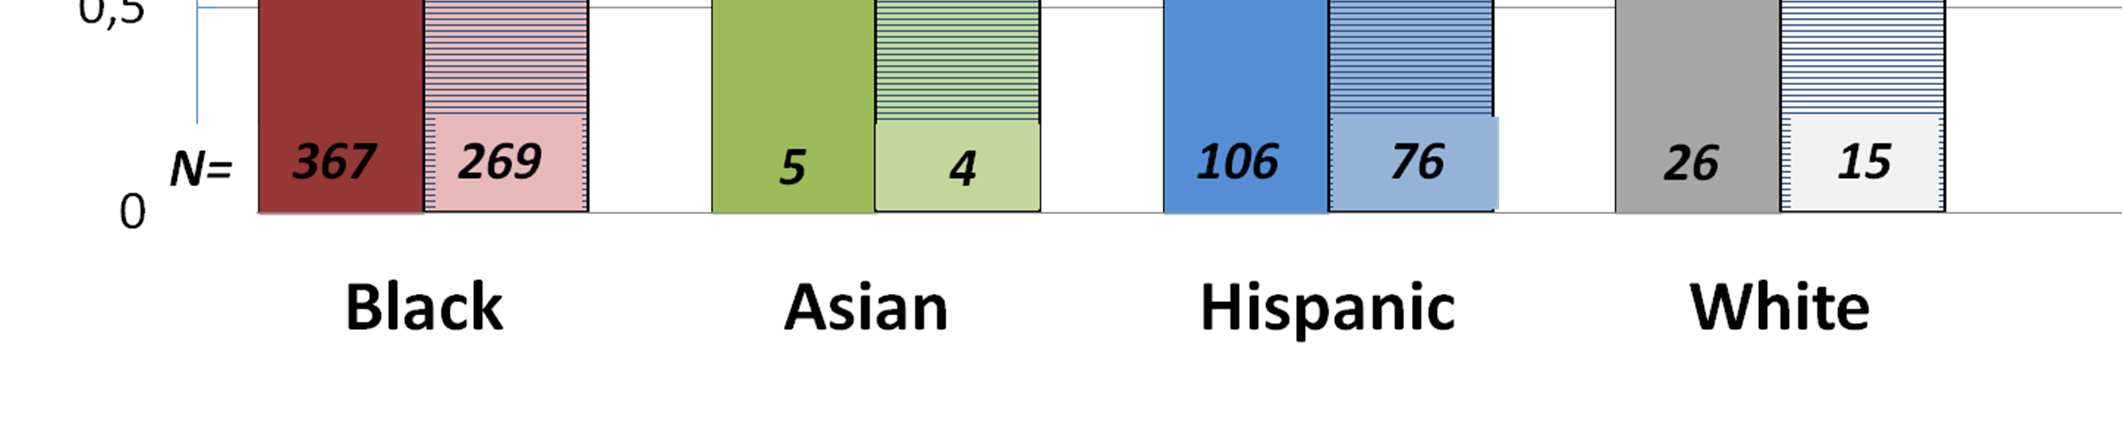 Race/Ethnicity p=0.